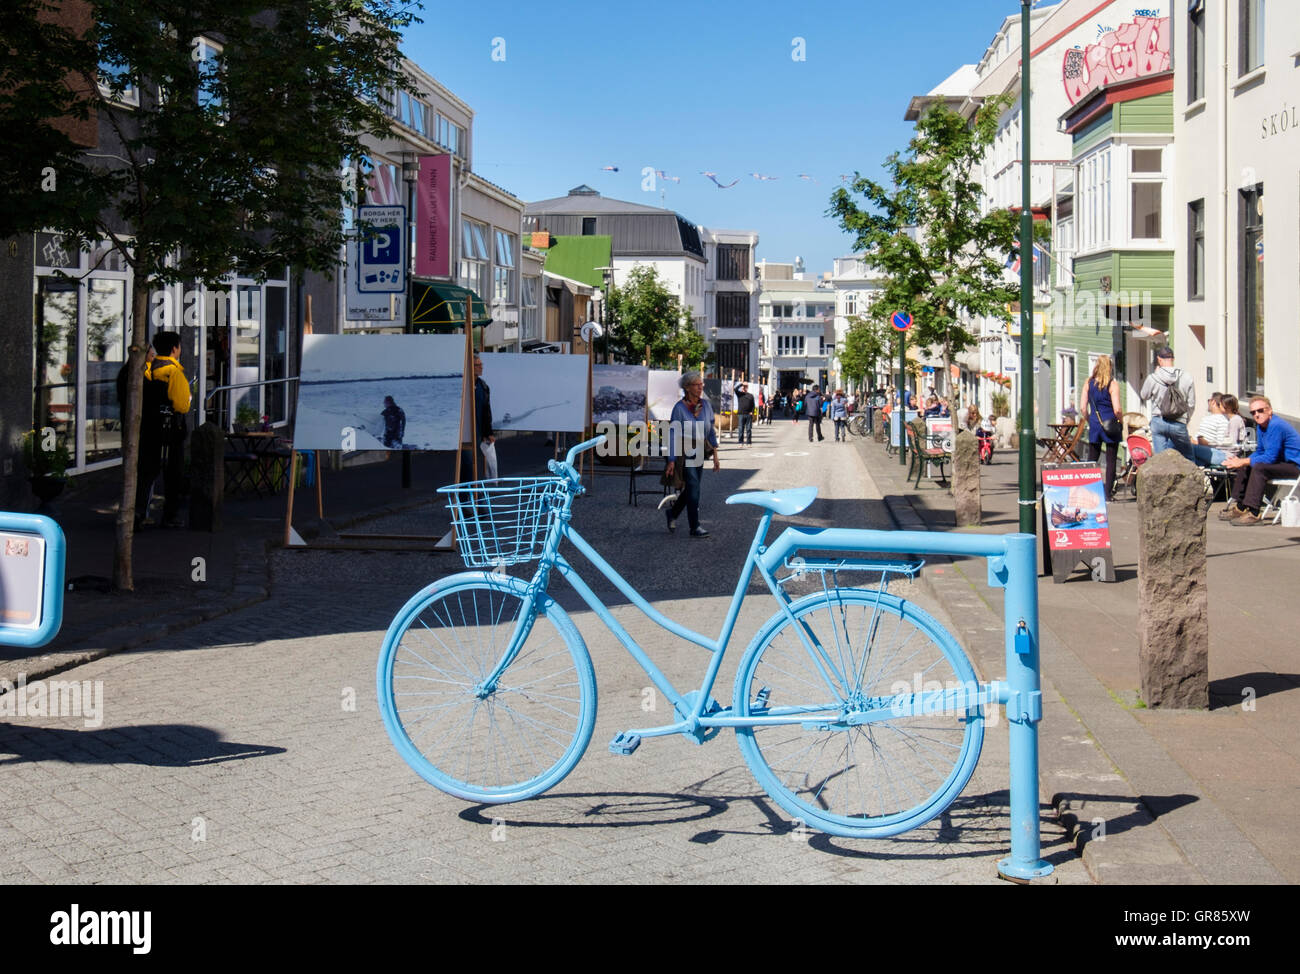 Strada pedonale in scena con la bicicletta blu barriera stradale di chiusura al traffico. Skolavordustigur, Reykjavik, Islanda Foto Stock